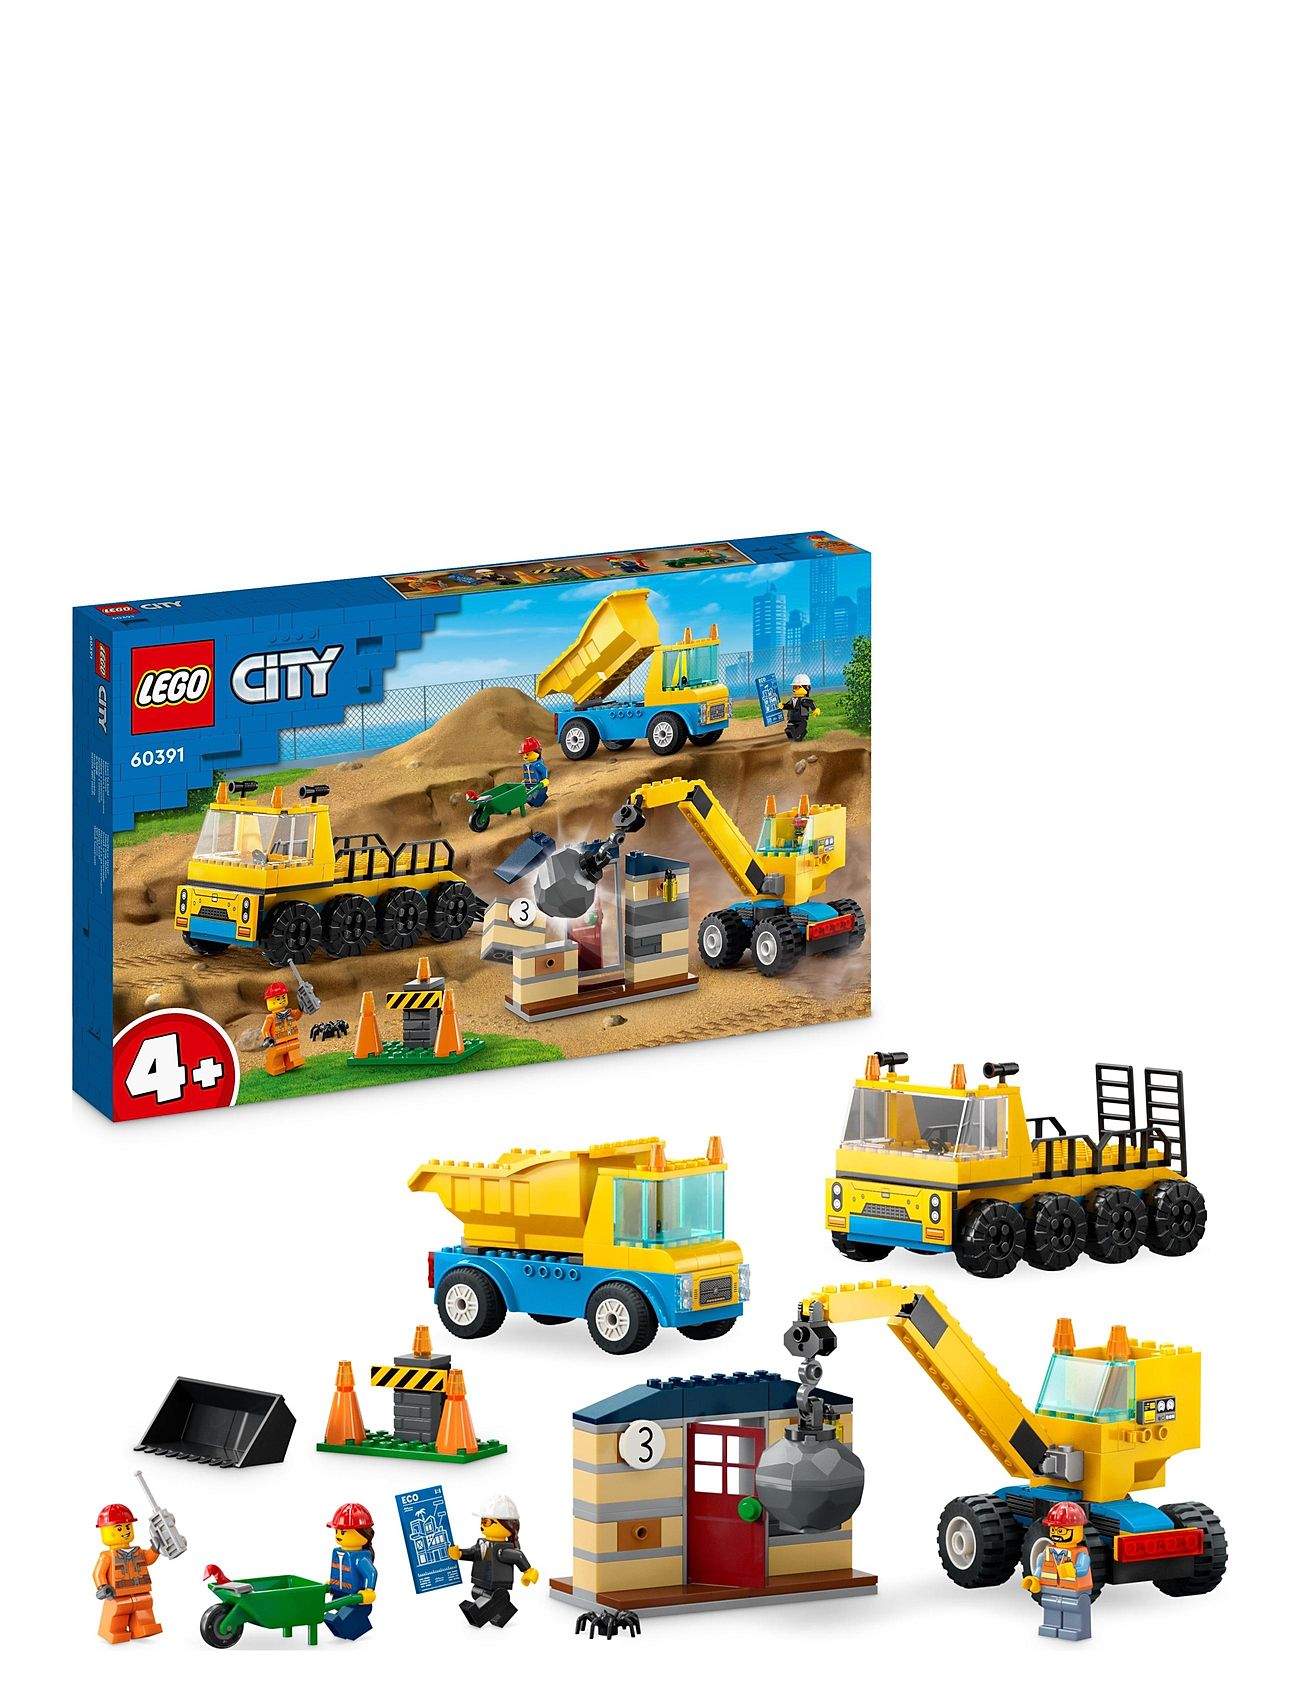 Construction Trucks & Wrecking Ball Crane Toys Toys Lego Toys Lego city Multi/patterned LEGO